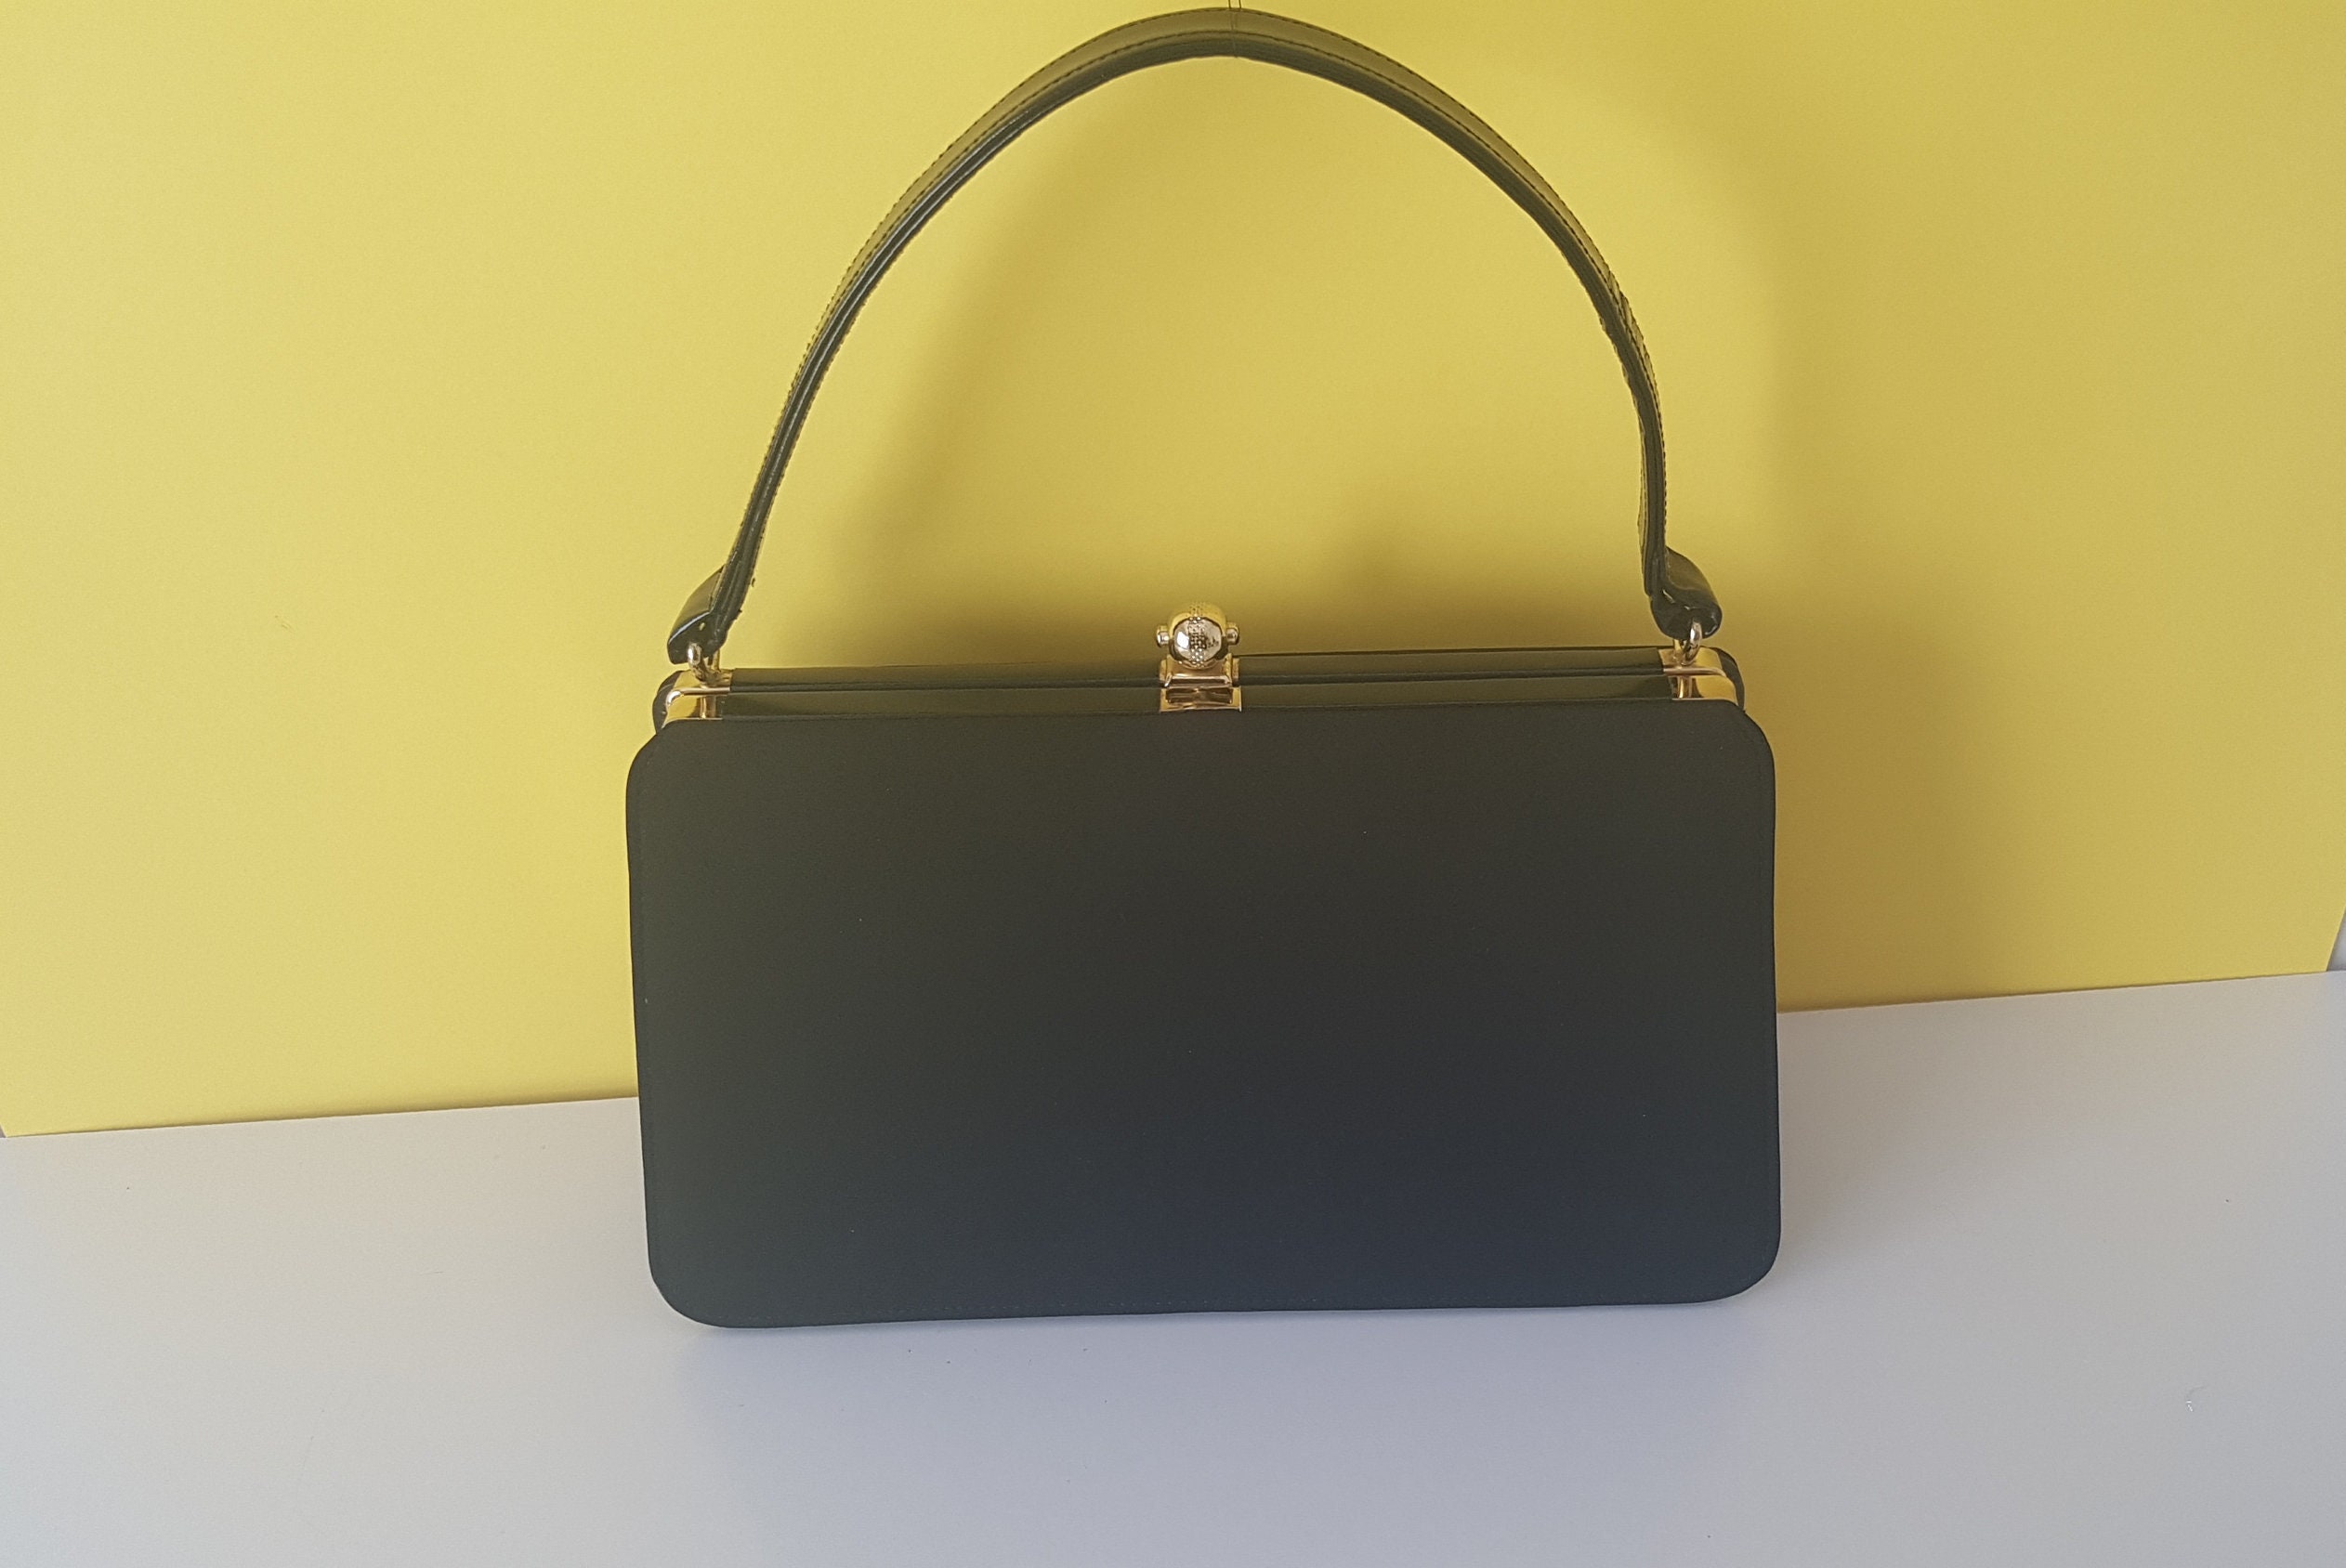 Guide to buying a vintage handbag - MELBOURNE GIRL